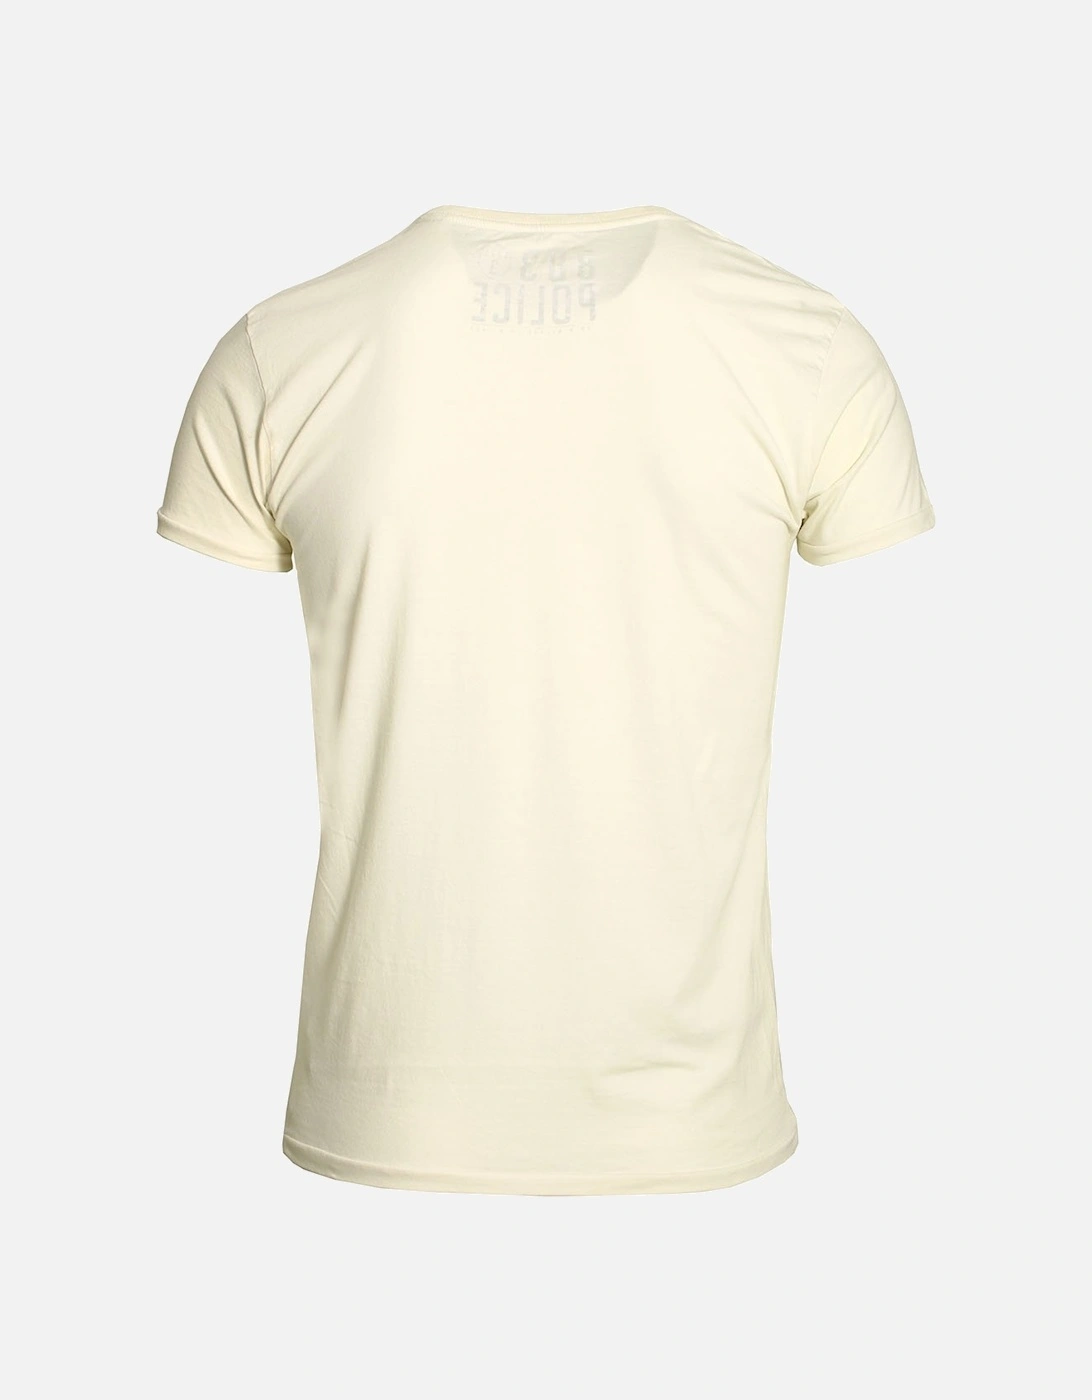 Antonio T-Shirt | Seapine Green & Off White